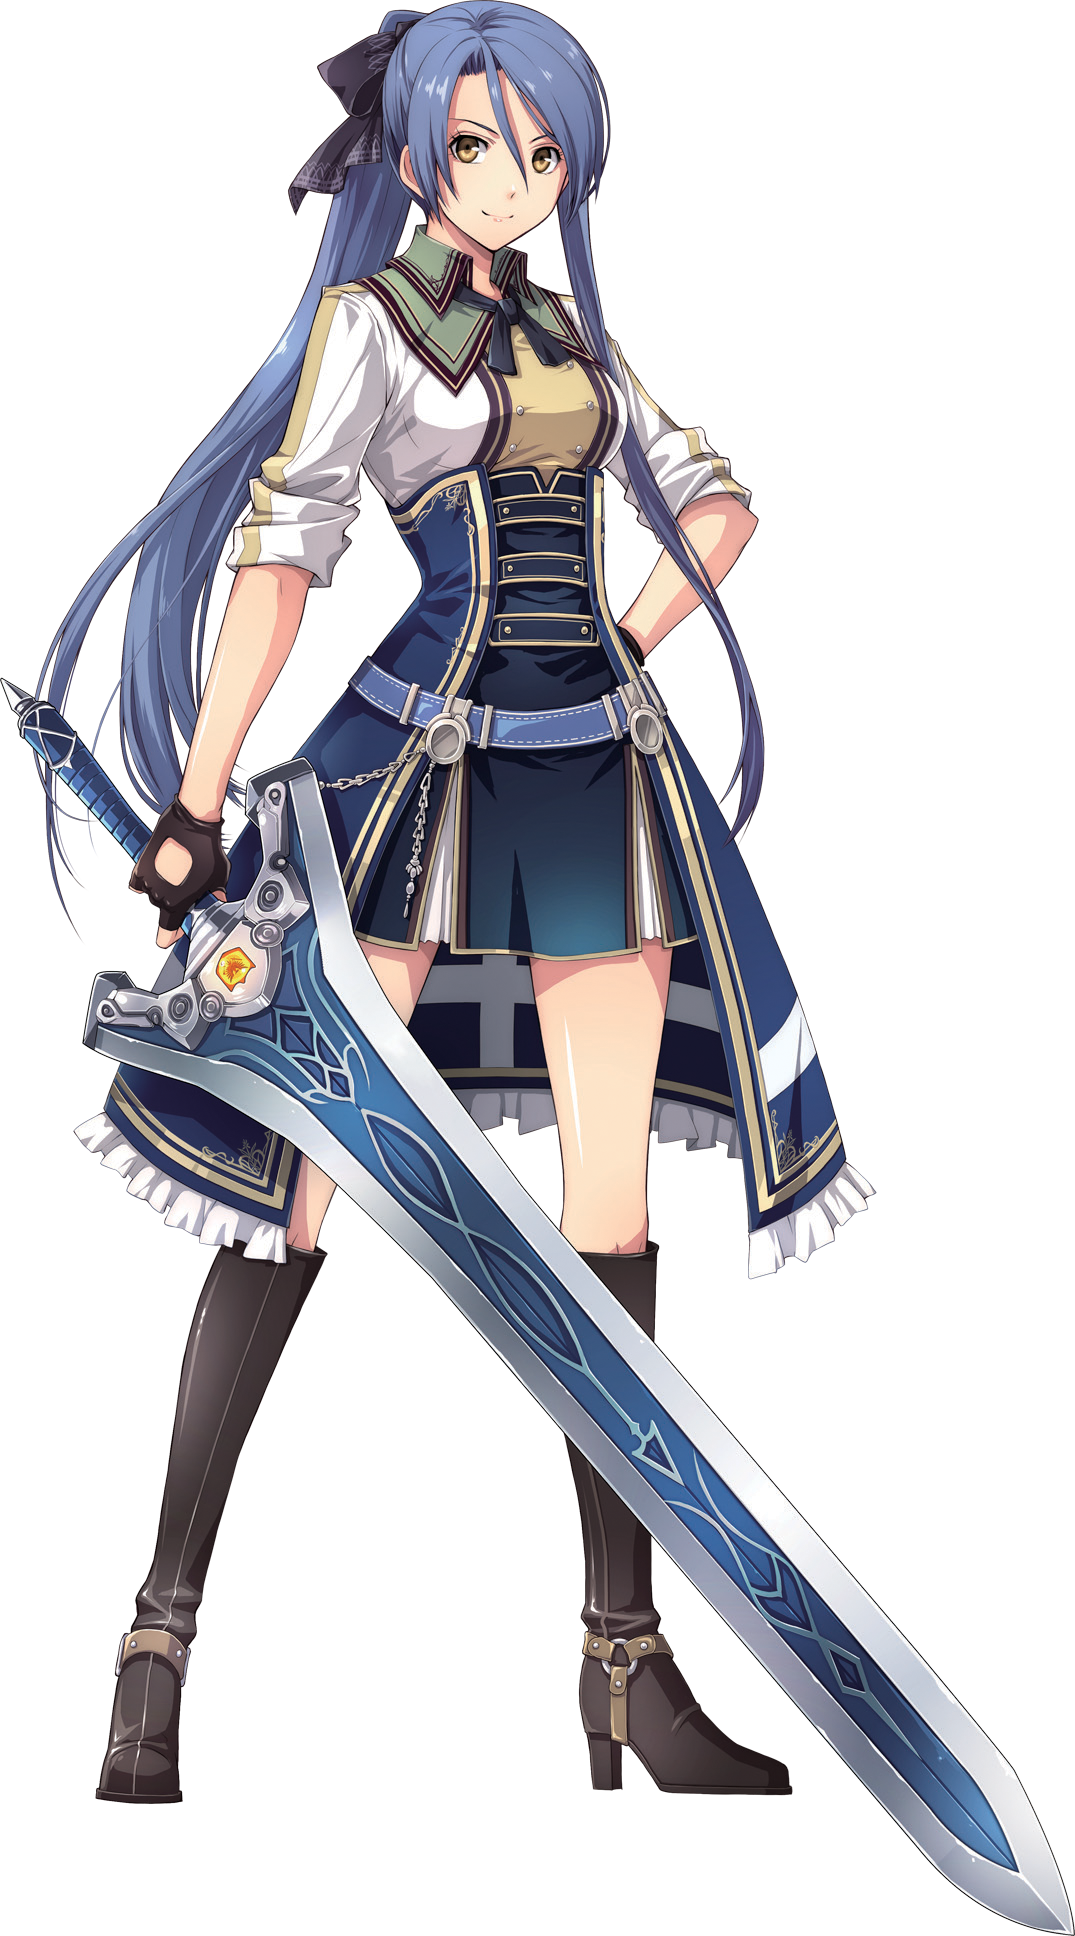 79cm 11 Big Sword Game Anime Weapon Sword Black Sky Sword Cosplay SkySword  PU Figure Model Toy